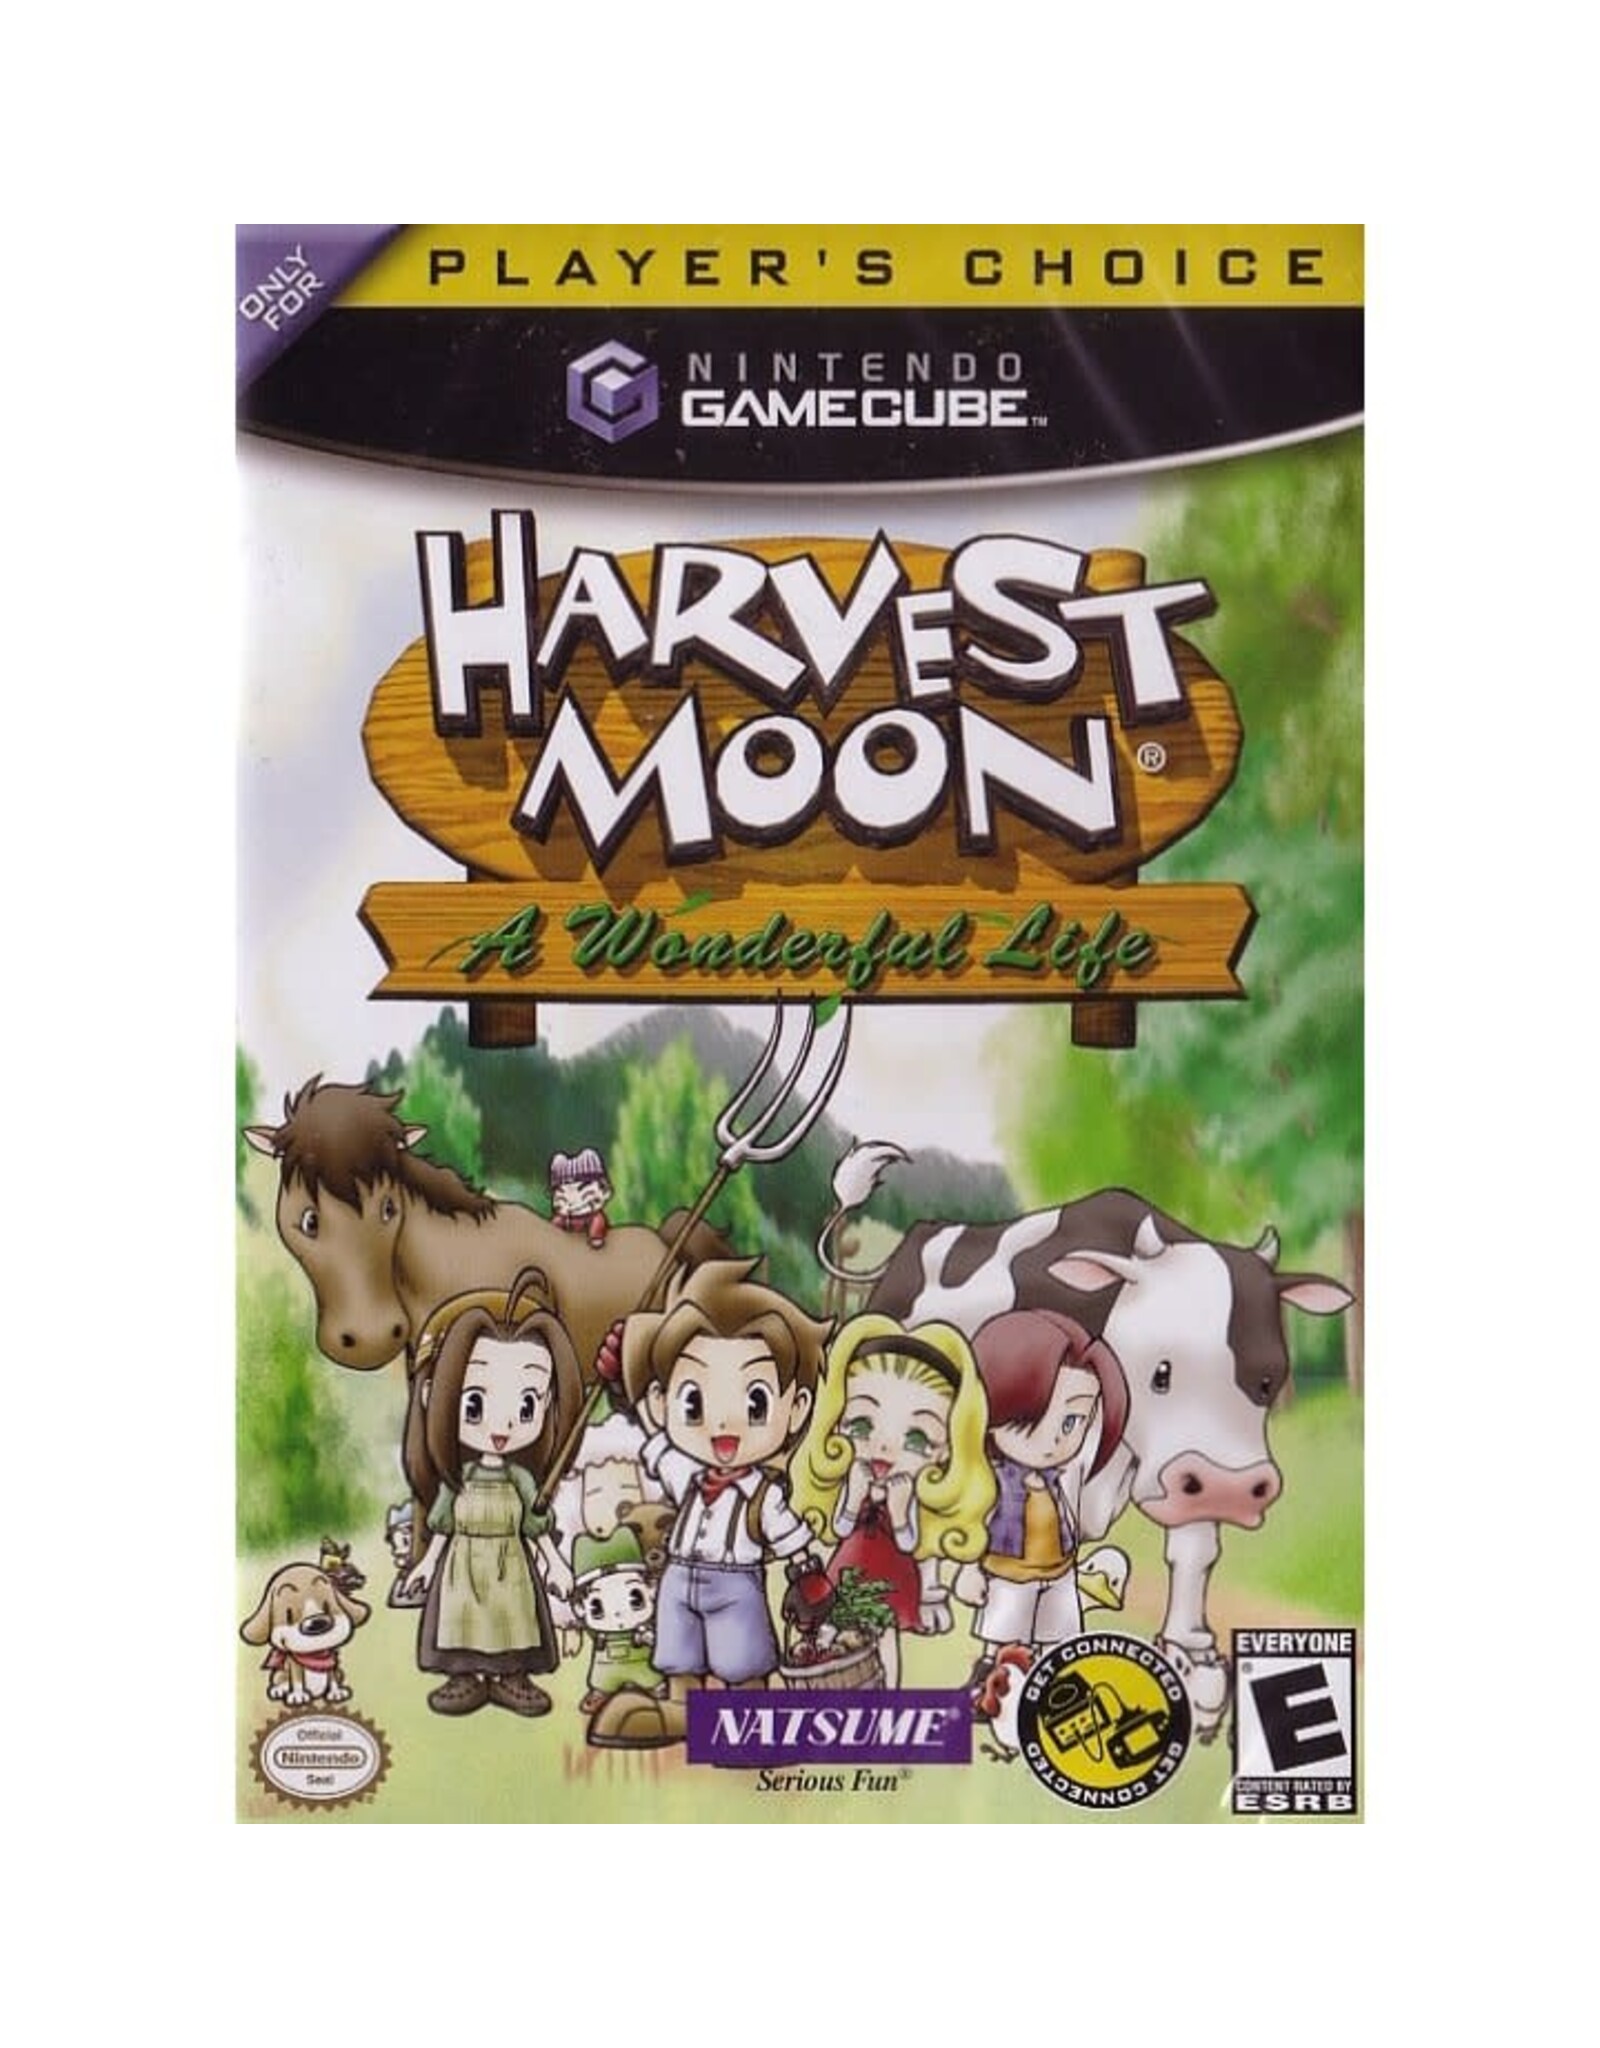 Gamecube Harvest Moon A Wonderful Life (Player's Choice, Brand New, Stickers on Shrinkwrap)